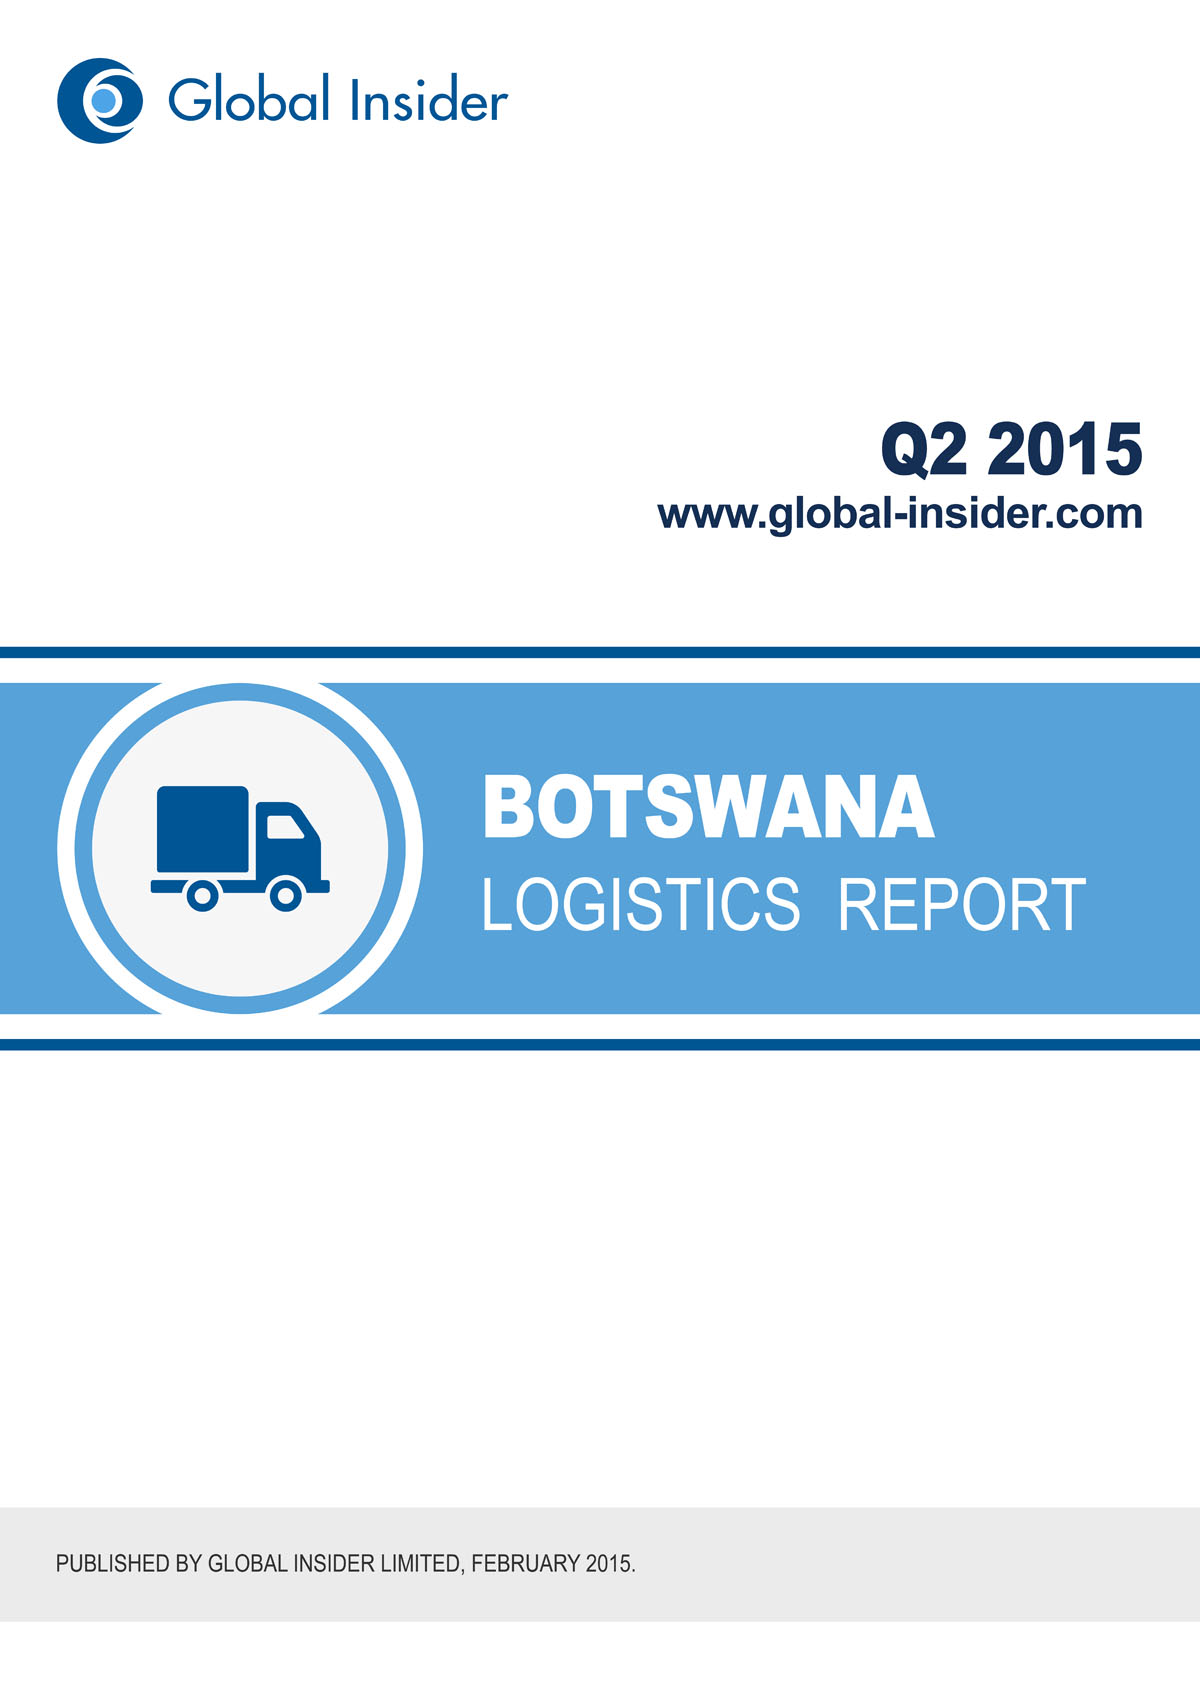 Botswana Logistics Report